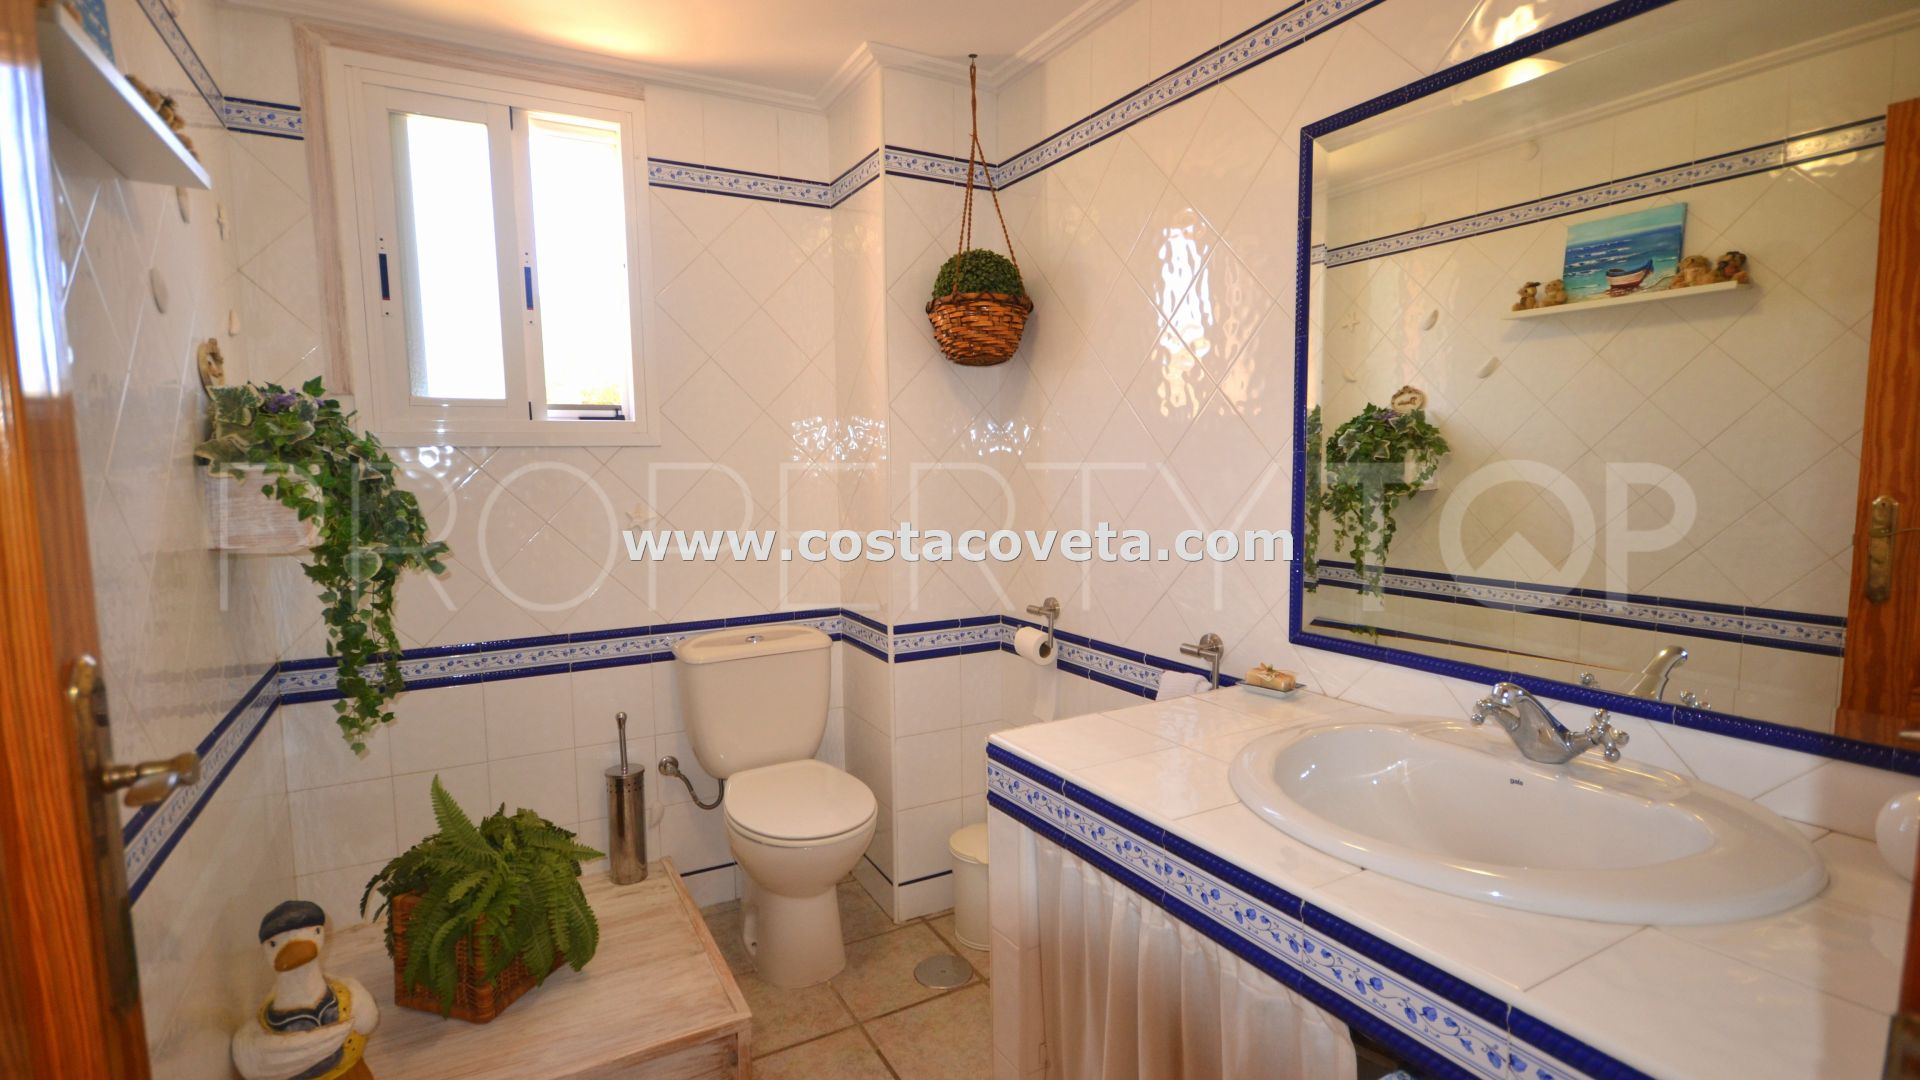 Buy Coveta Fuma house with 5 bedrooms